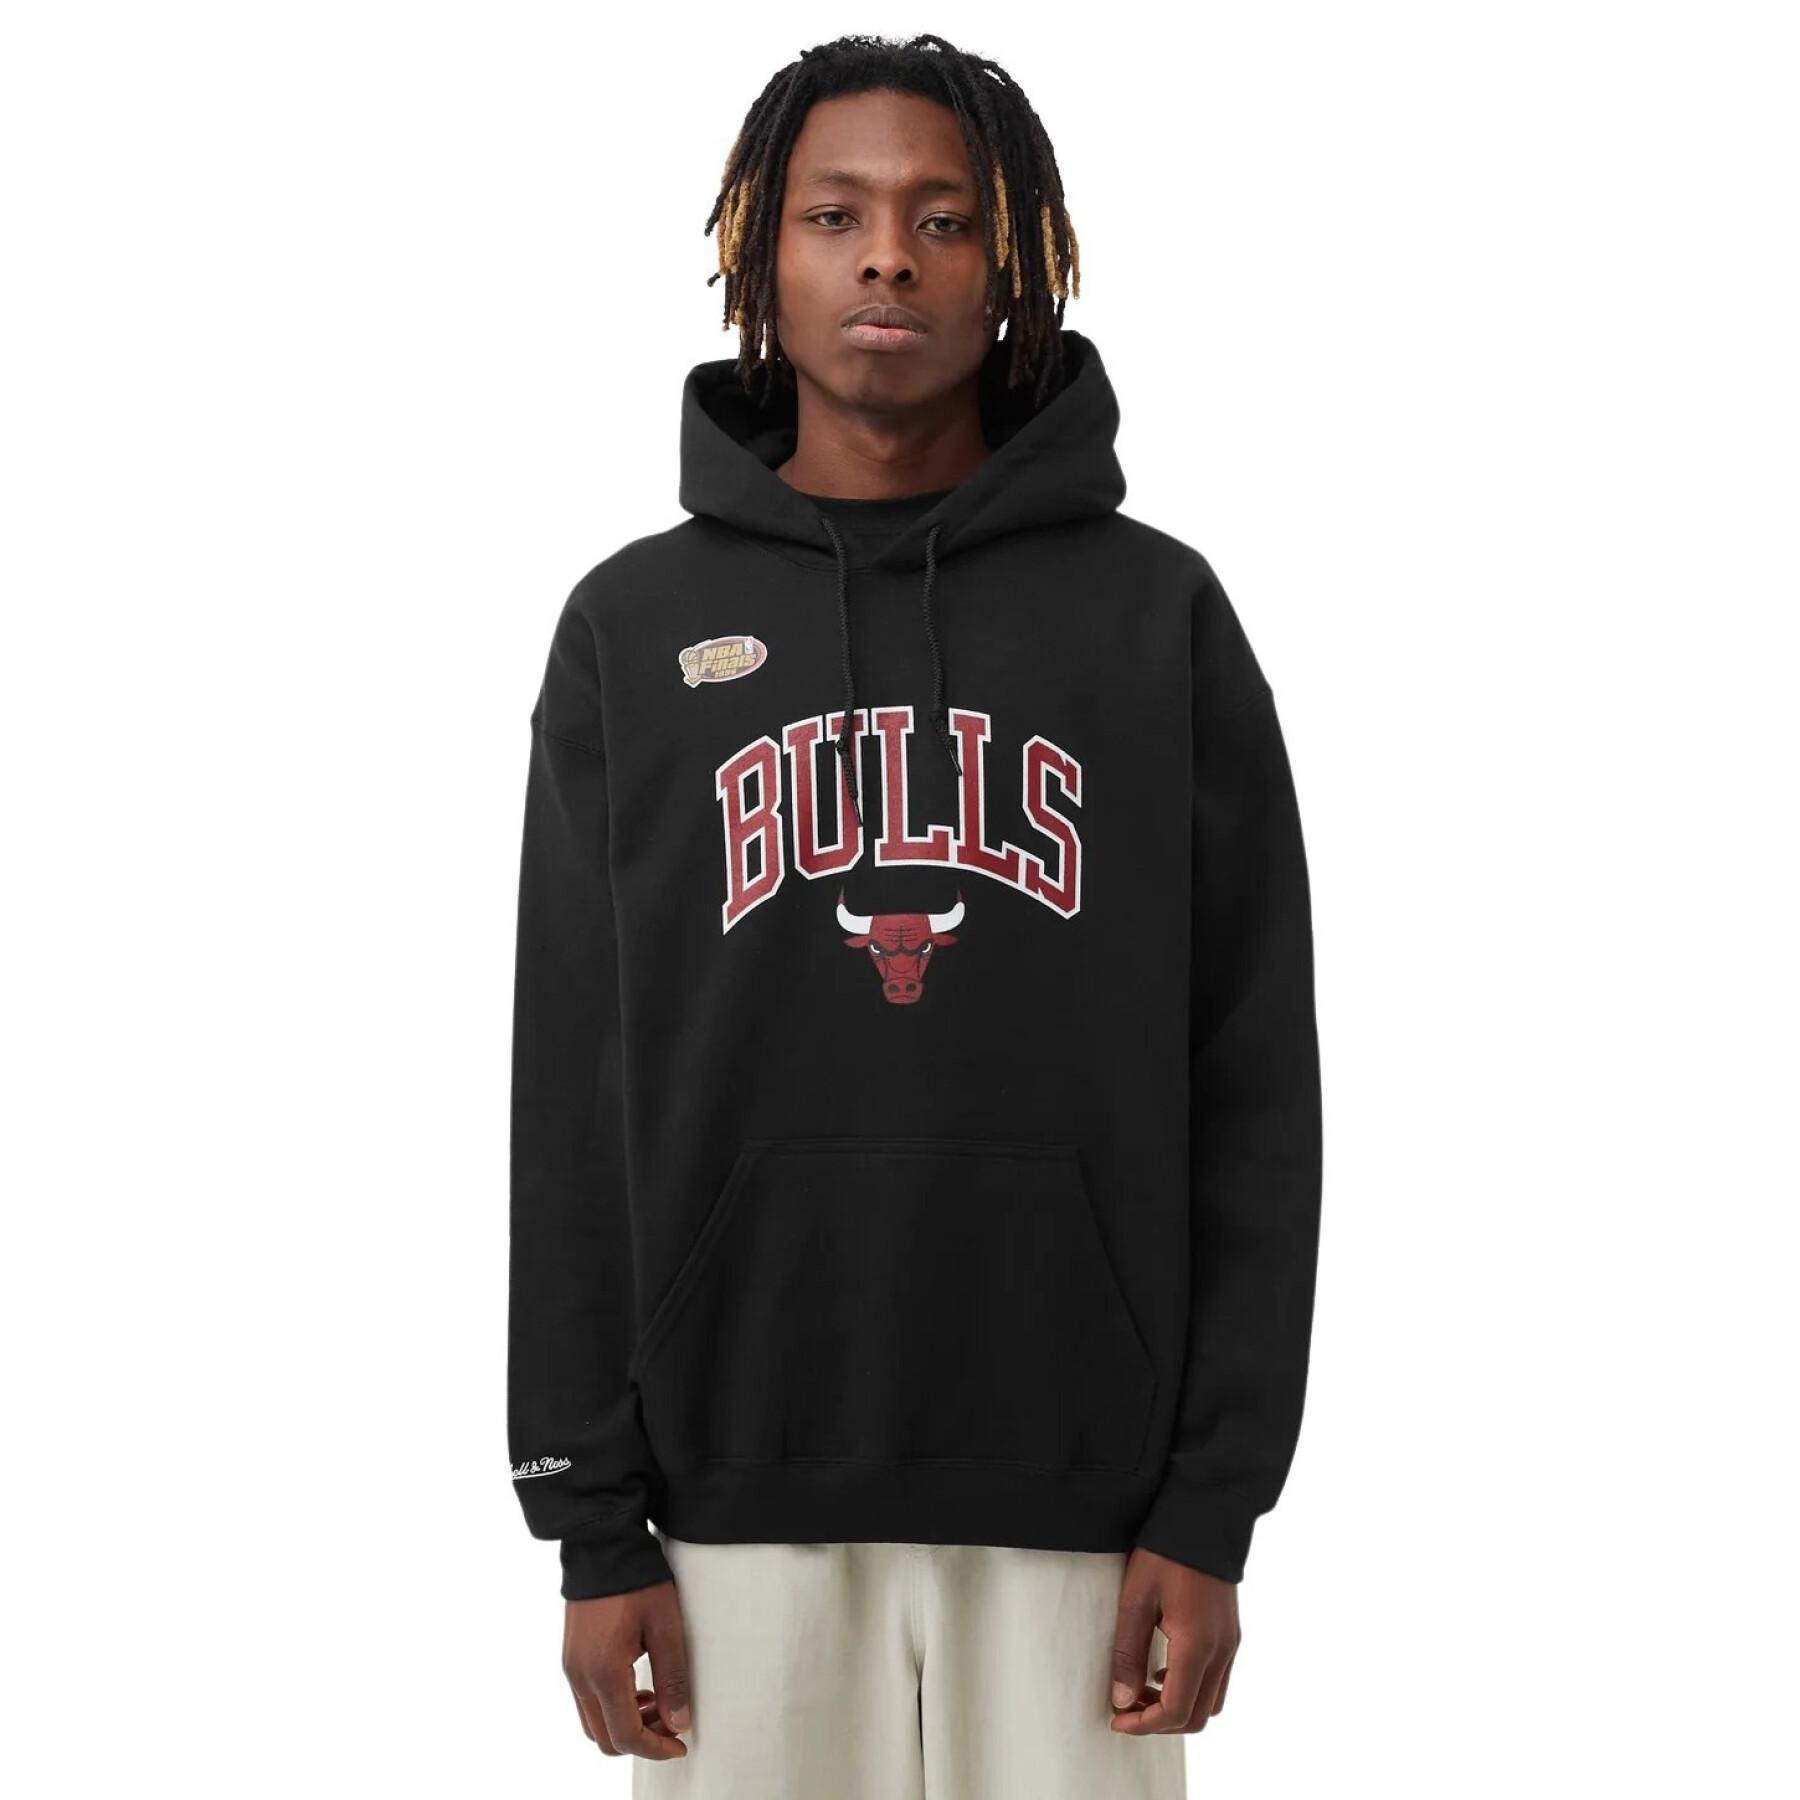 Arch hoodie Chicago Bulls 2021/22